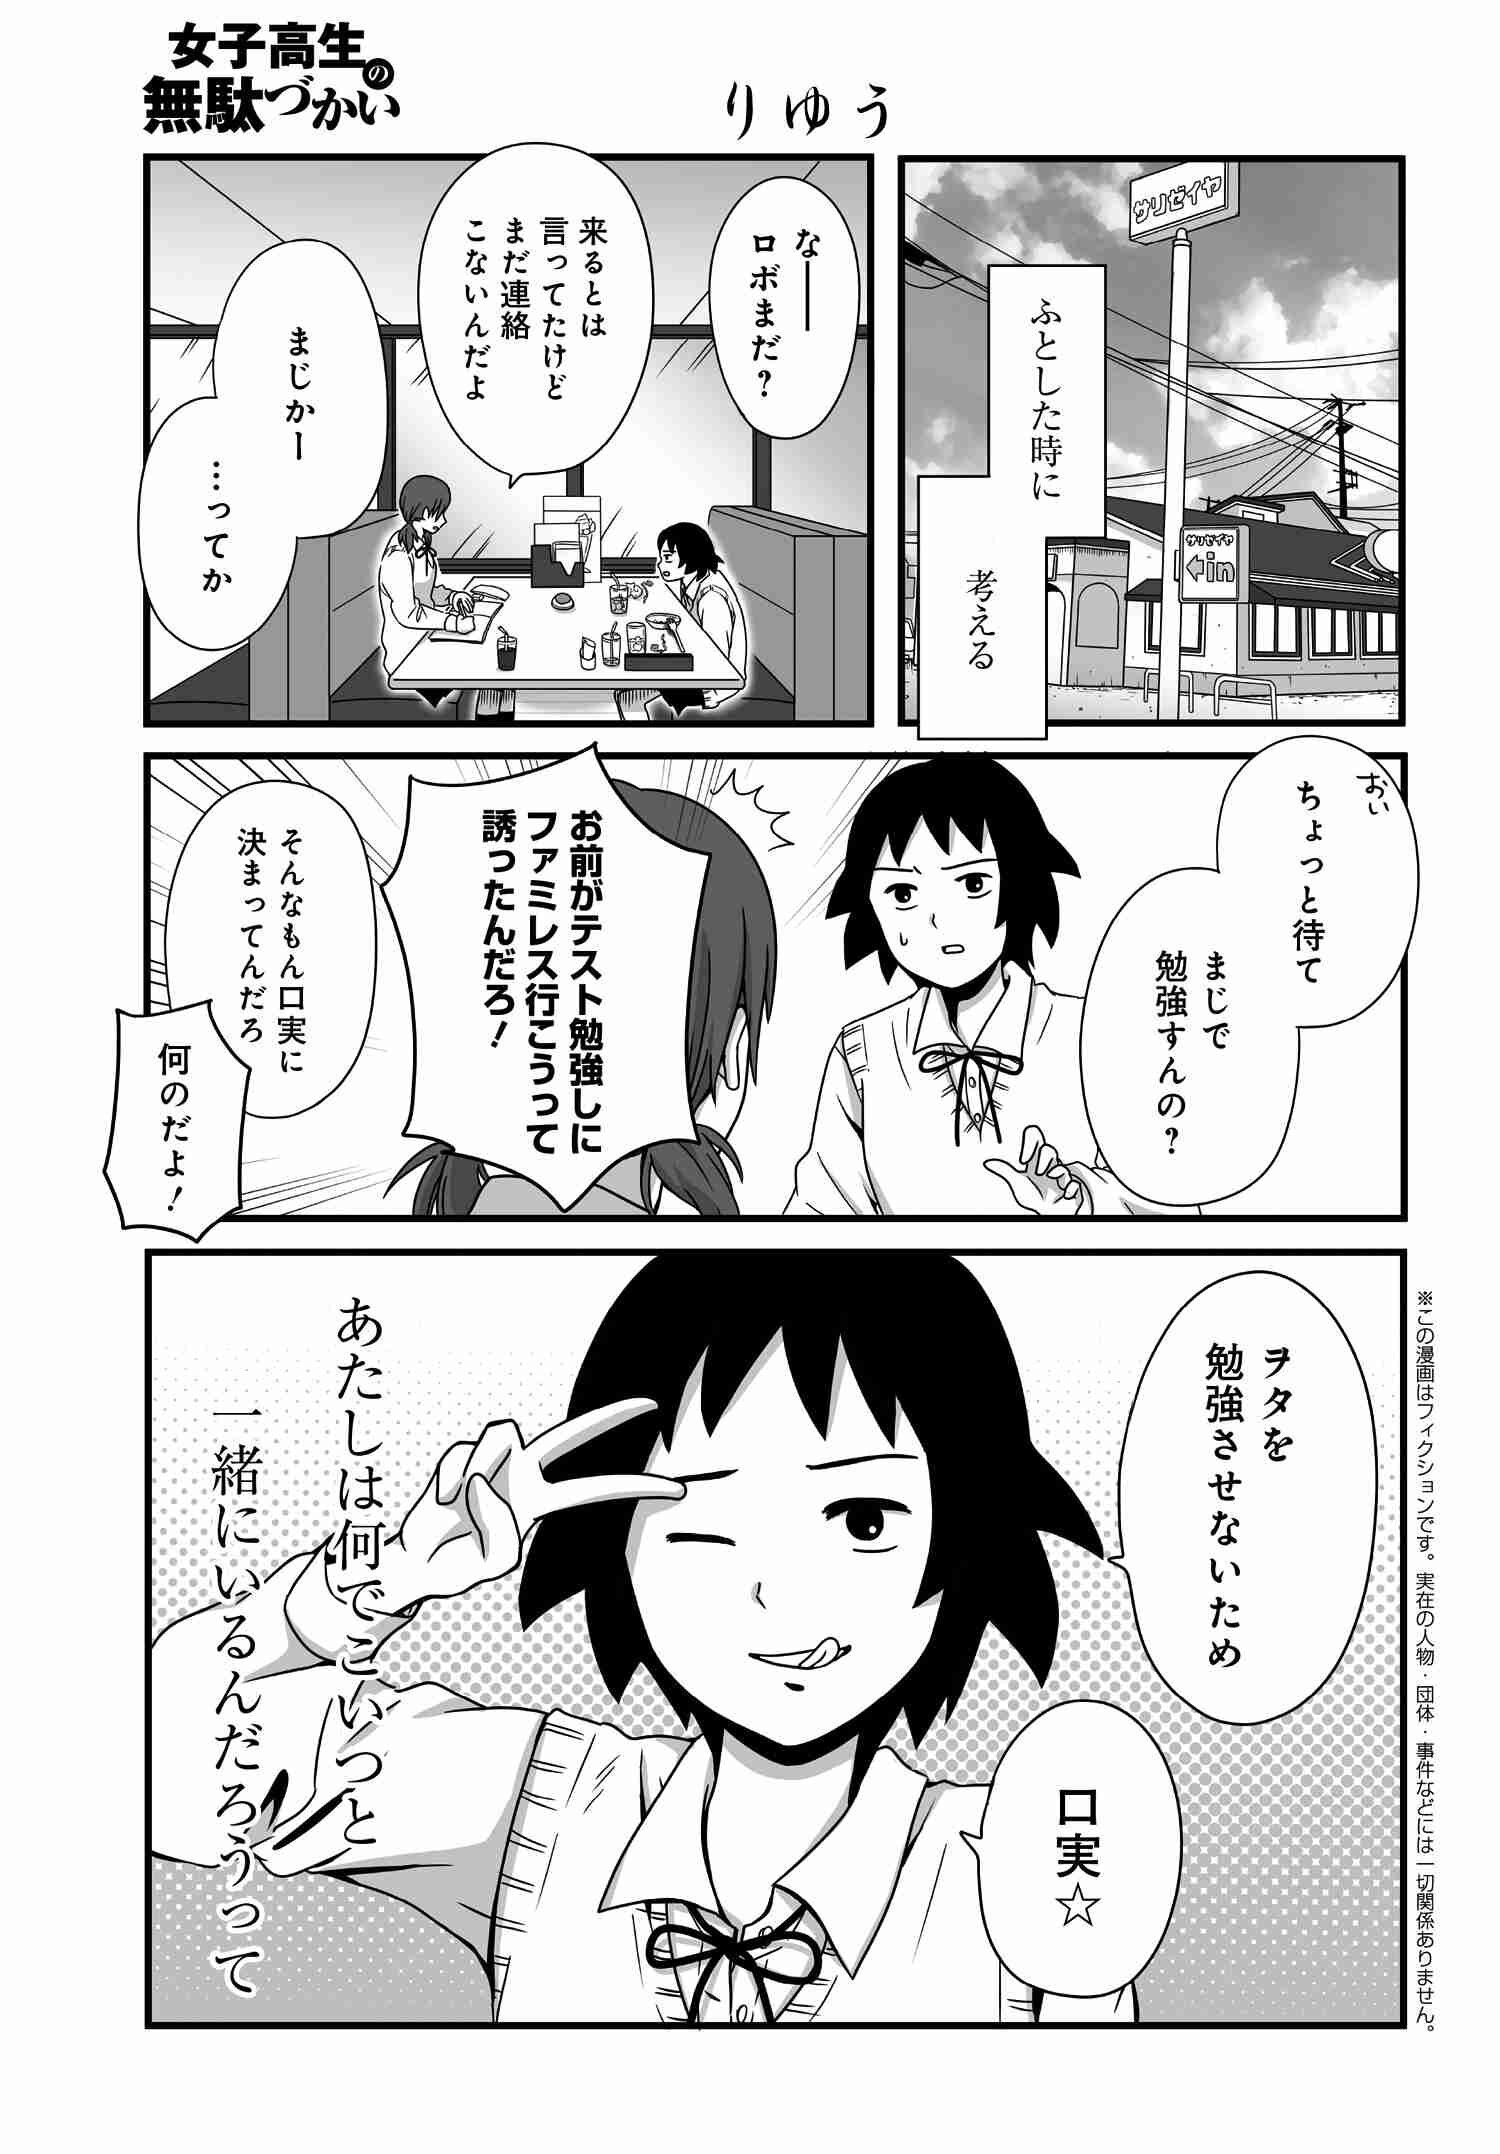 Joshikousei no Mudazukai - Chapter 008 - Page 1